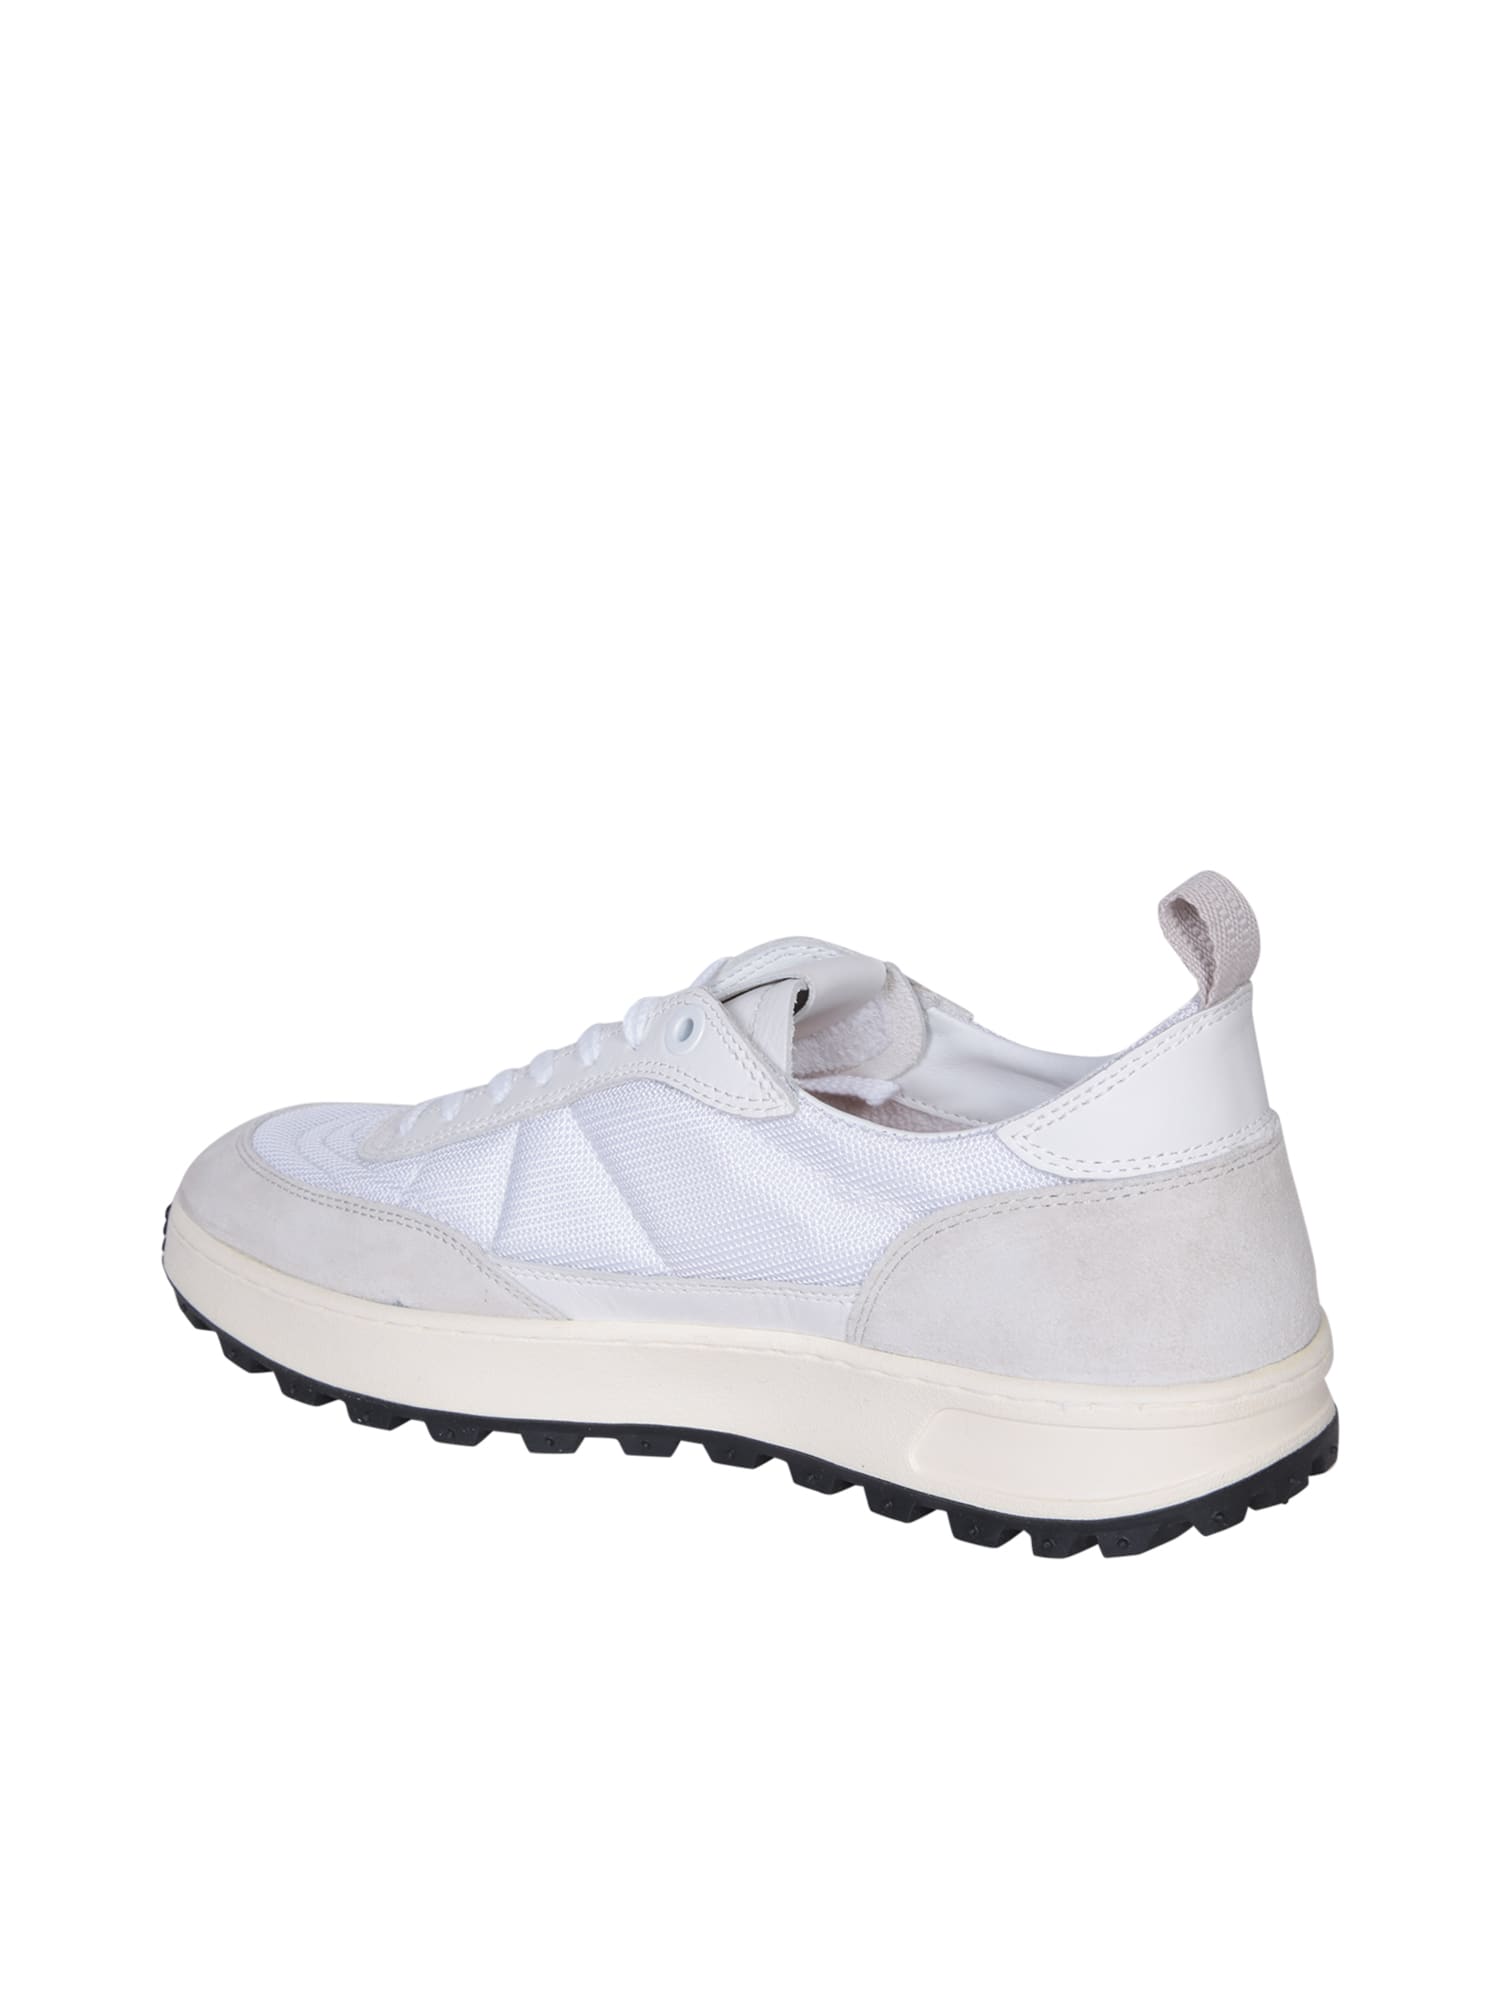 Shop Date D.a.t.e. K2 White Sneakers